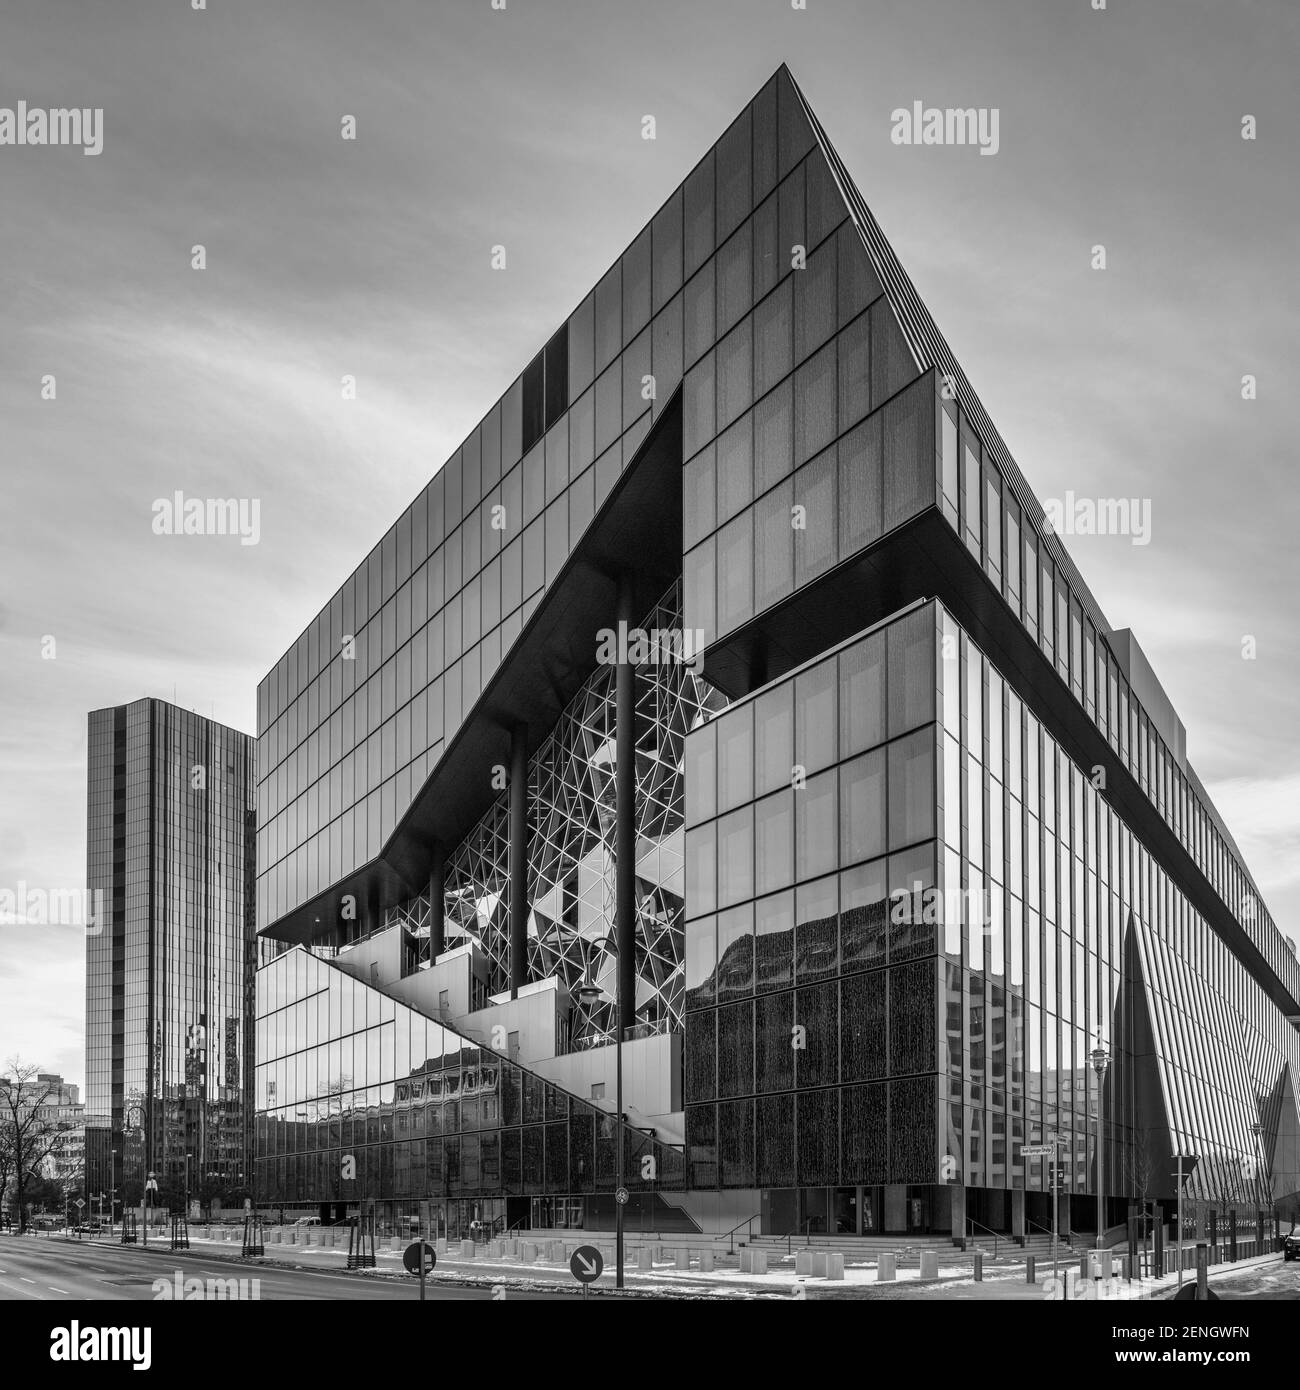 Neubau Axel-Springer Verlagshaus, Architekt Rem Koolhaas, Buero „Office for Metropolitan Architecture“ (OMA) , Aussenaufnahme , Berlin Banque D'Images